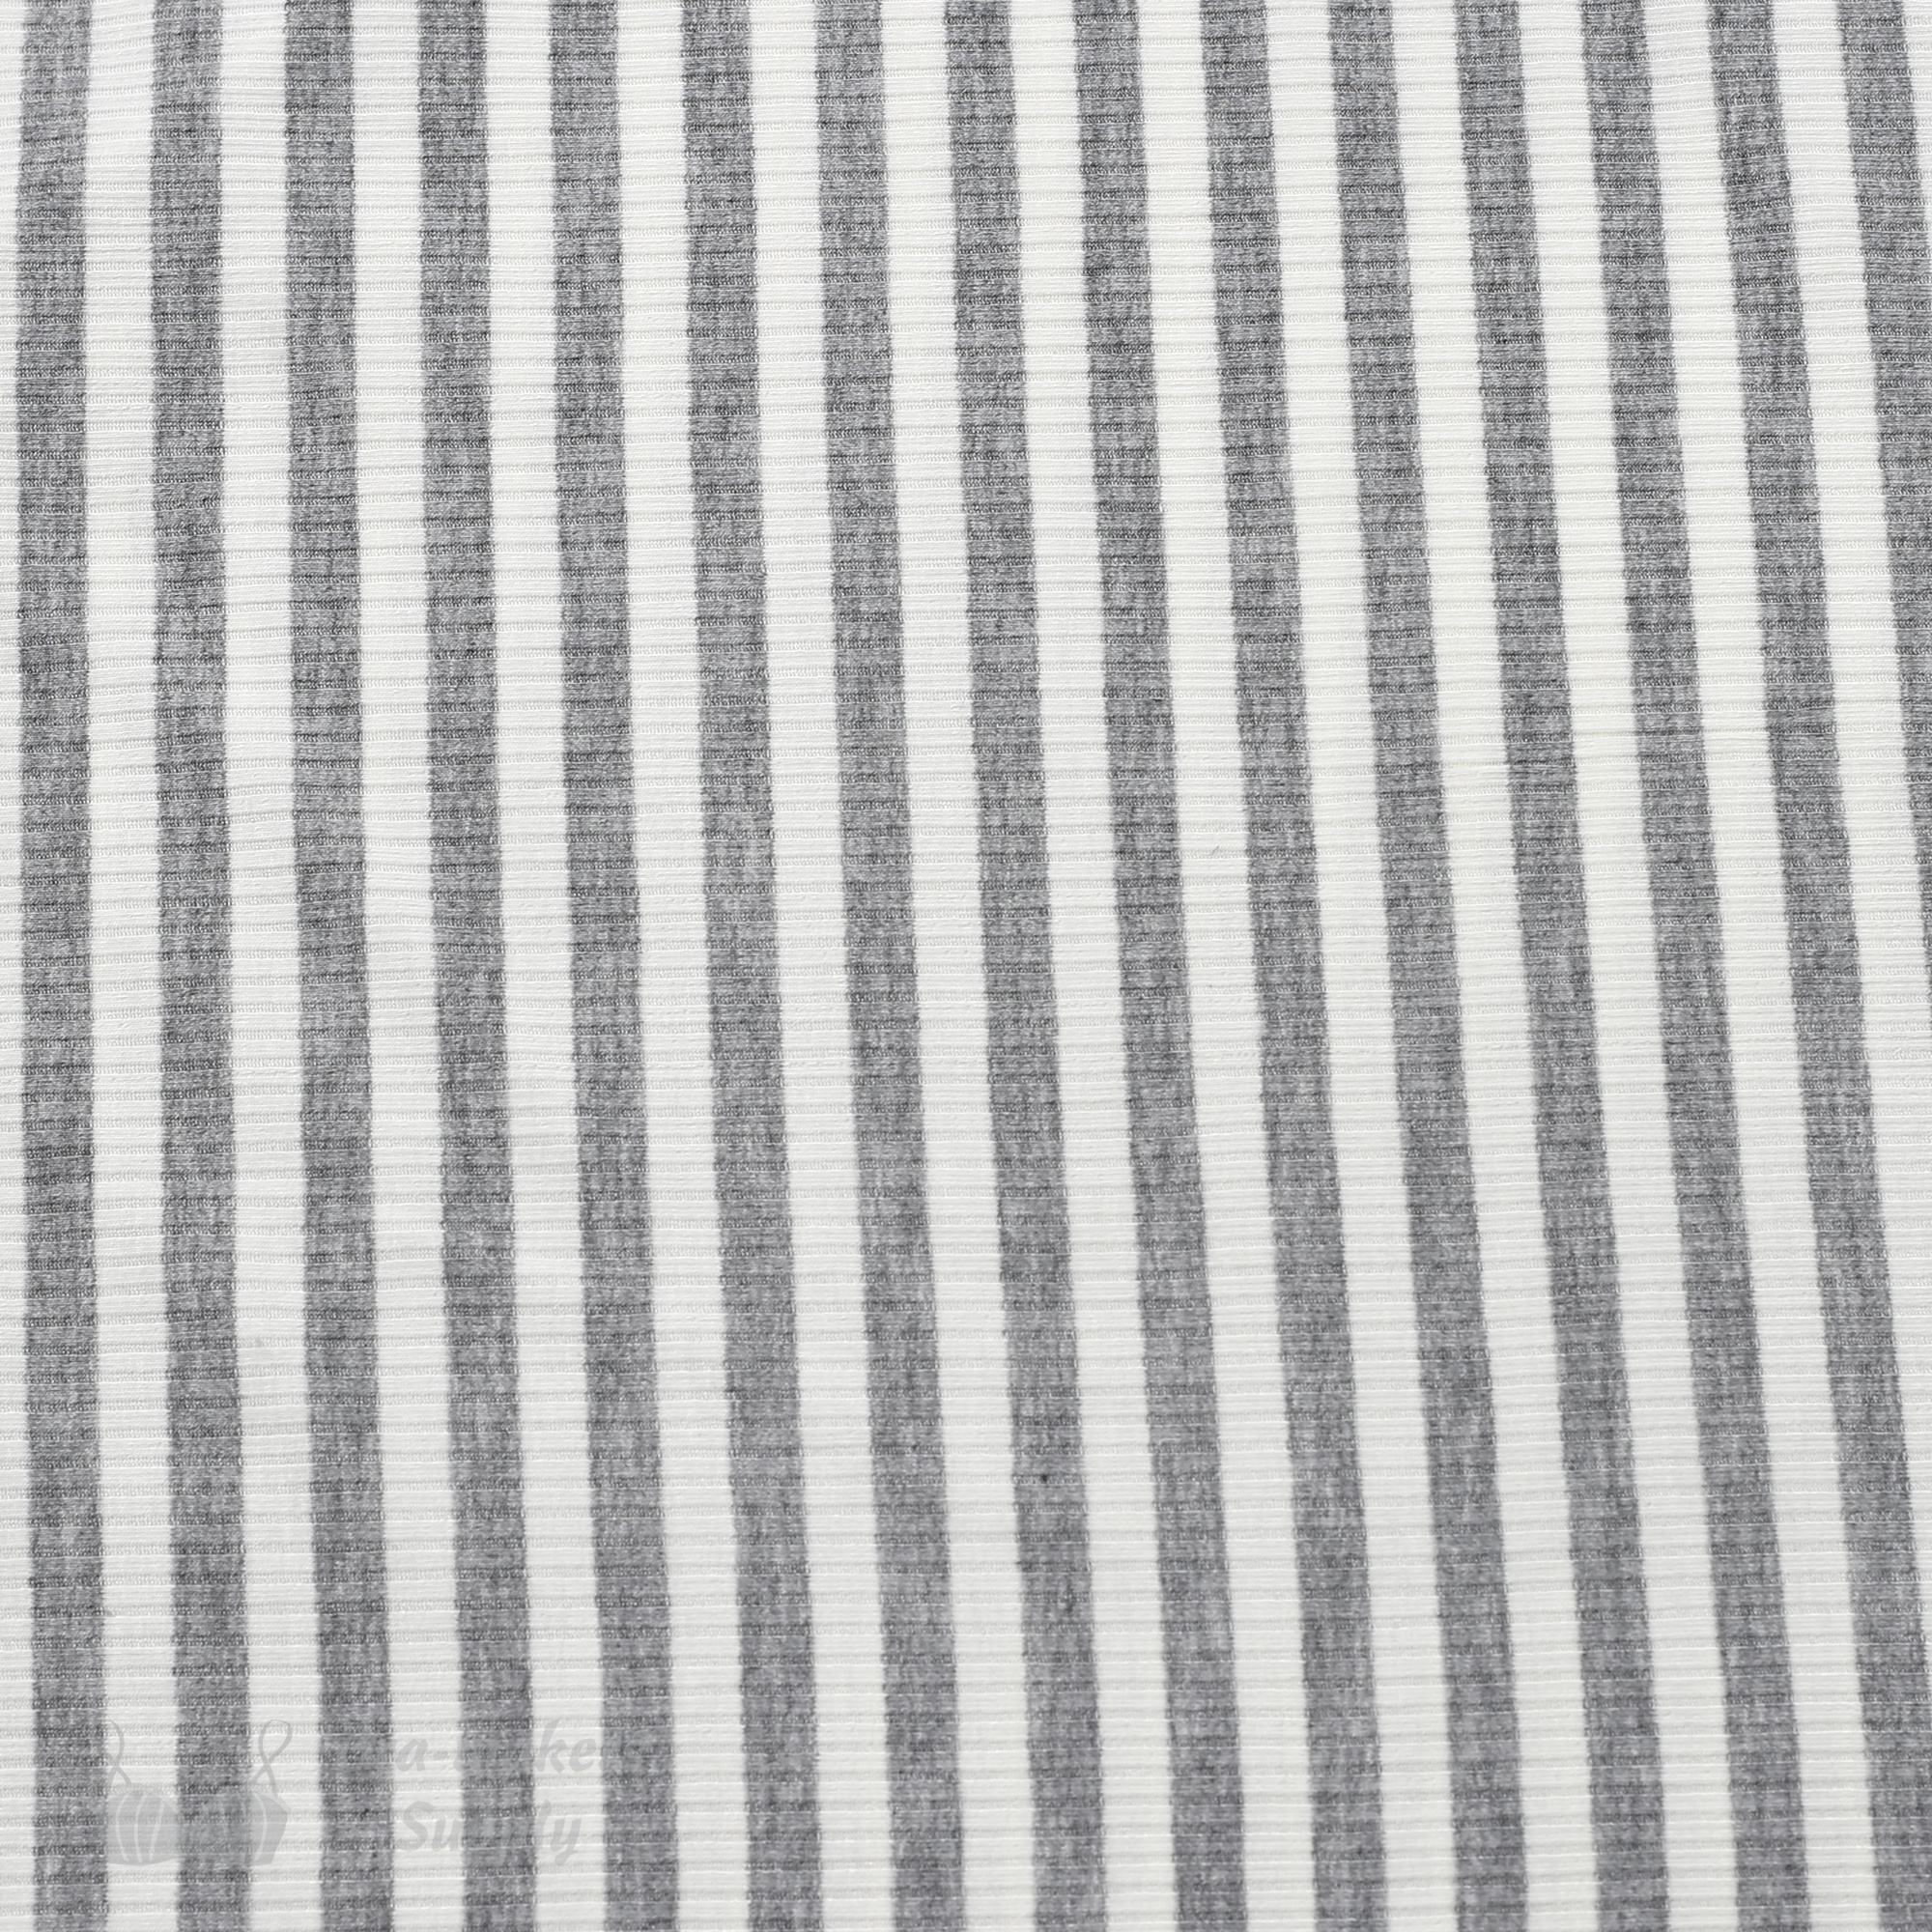 gray-ribbed-knit-texture